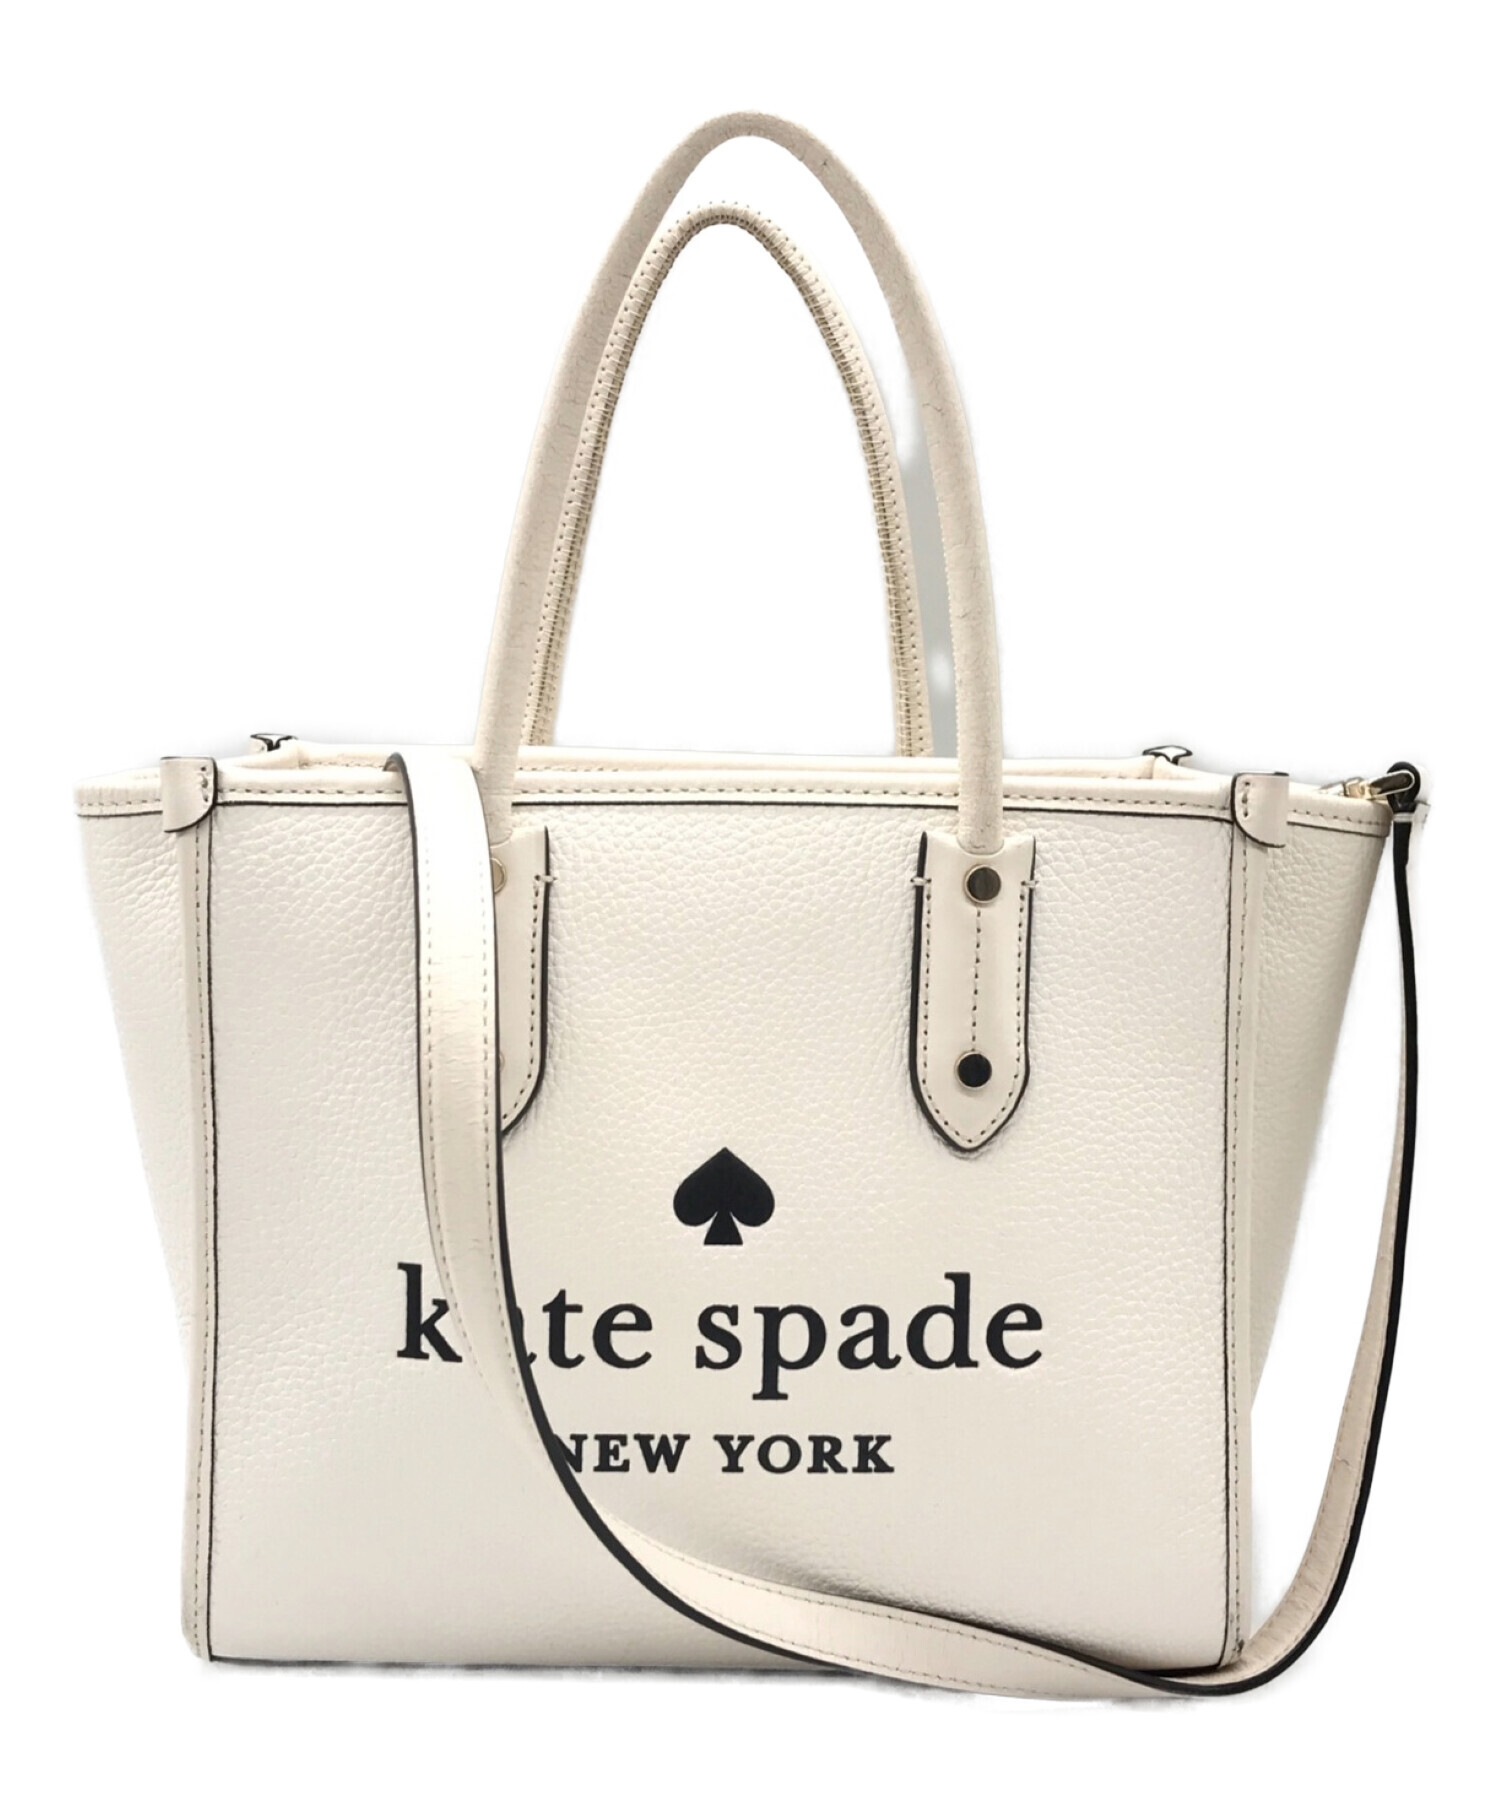 kate spade new yorkYork ショルダーバッグ ホワイト - ショルダーバッグ